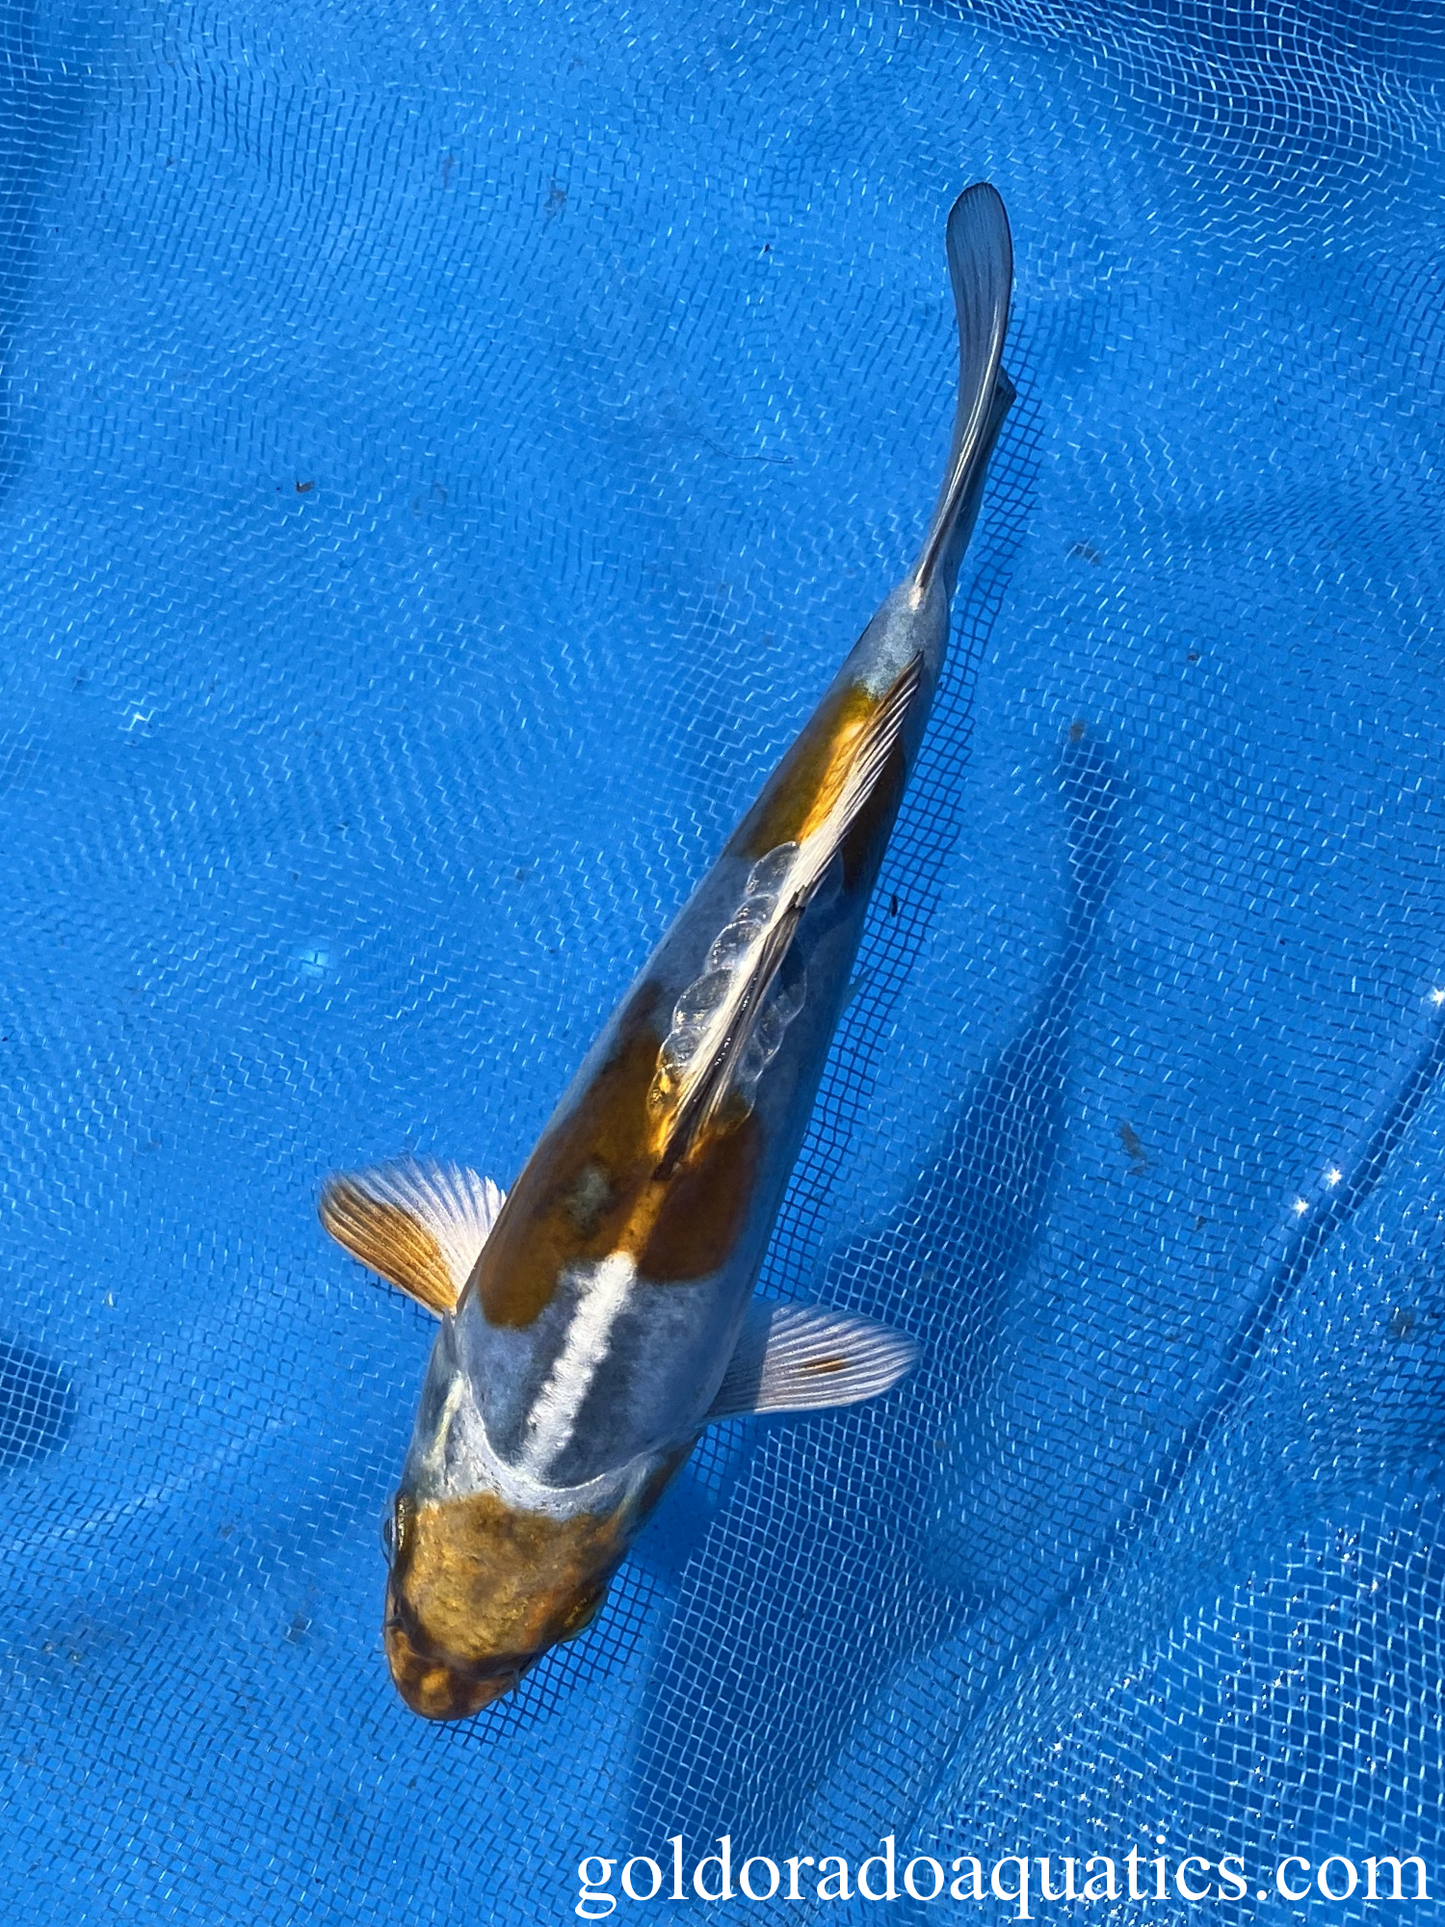 Image of a Kikokuryu koi fish. A metallic scaleless black and white colored koi fish.